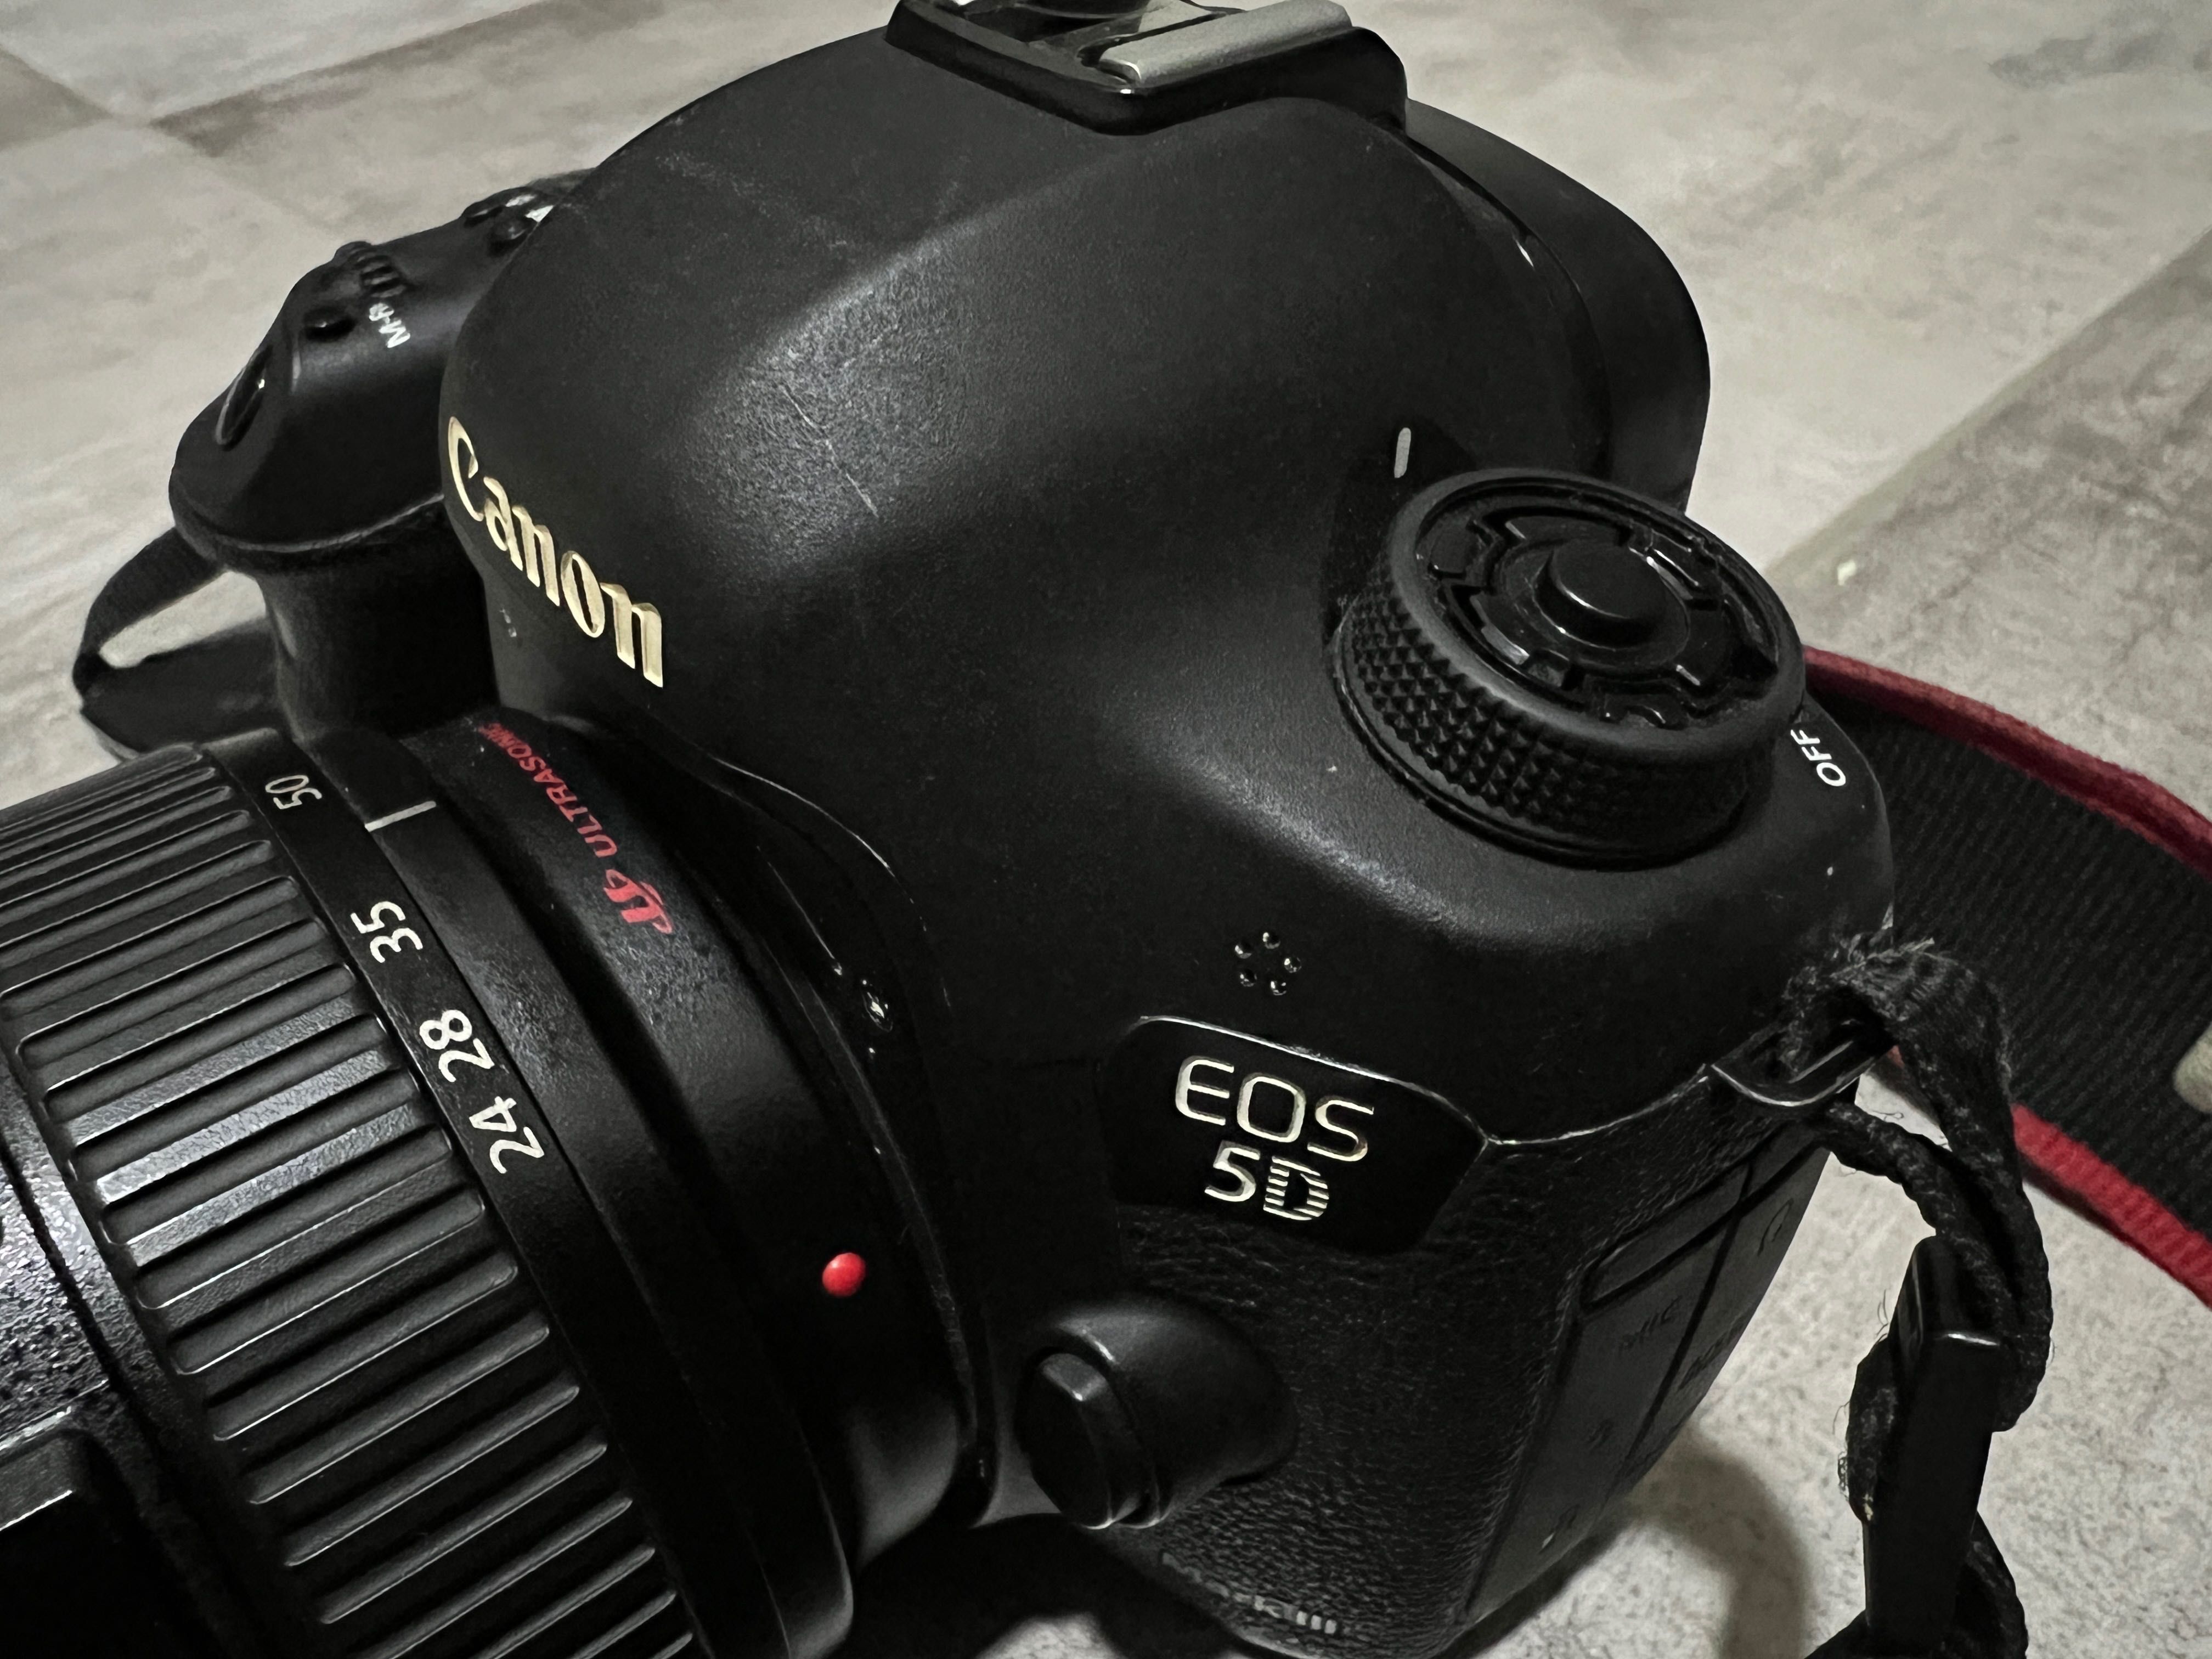 Canon 5D Mark III + Canon EF 24-70mm f/2.8L